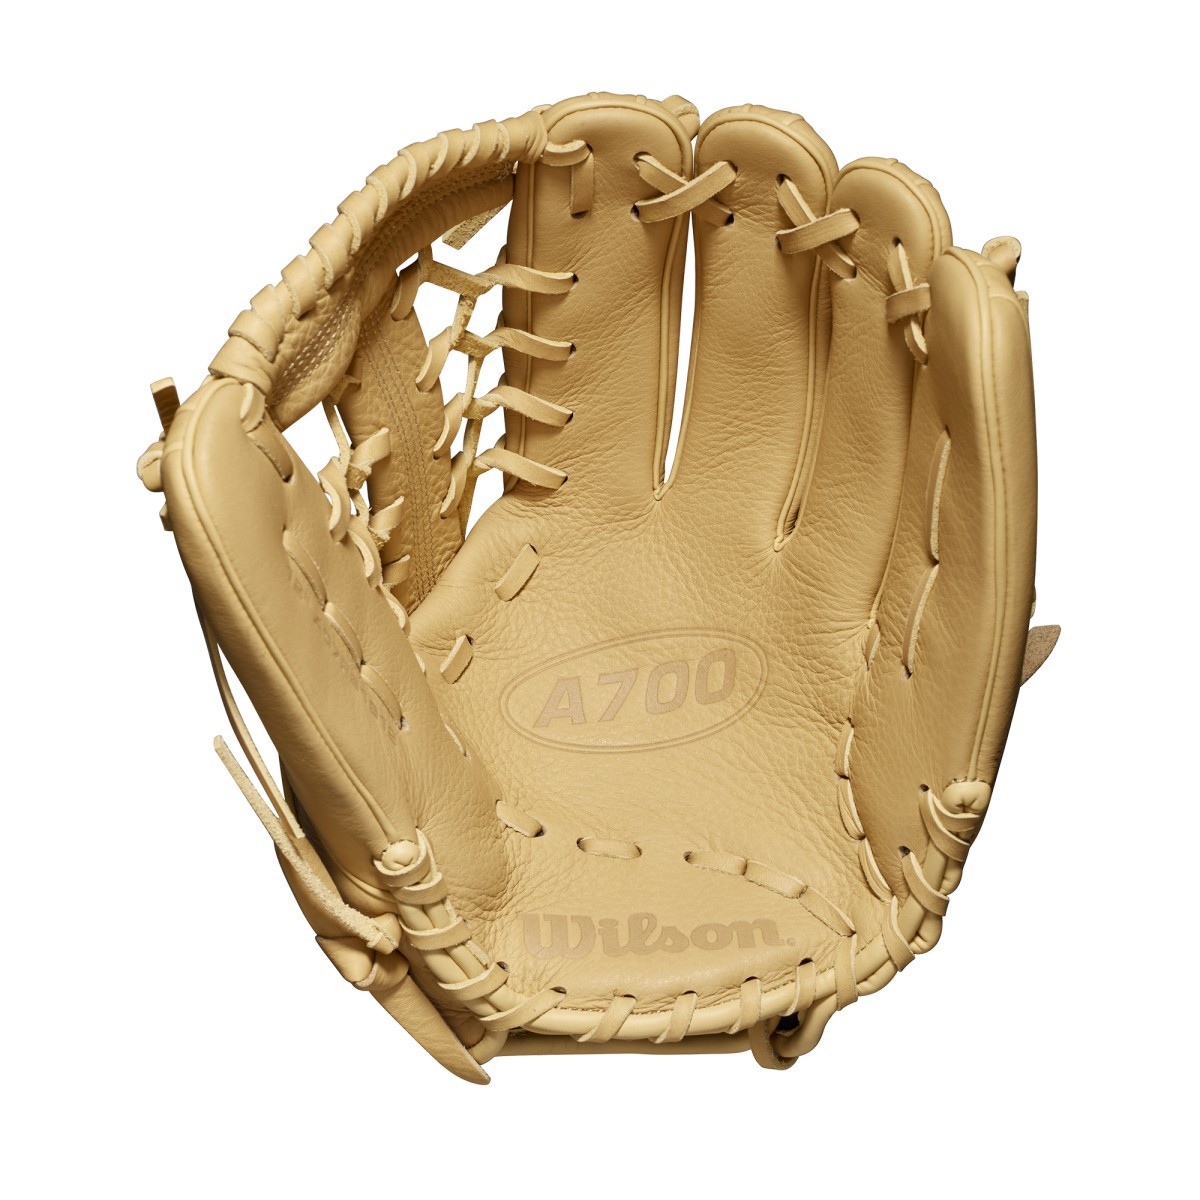 Wilson A700 12" Baseball Glove - Right Hand Throw